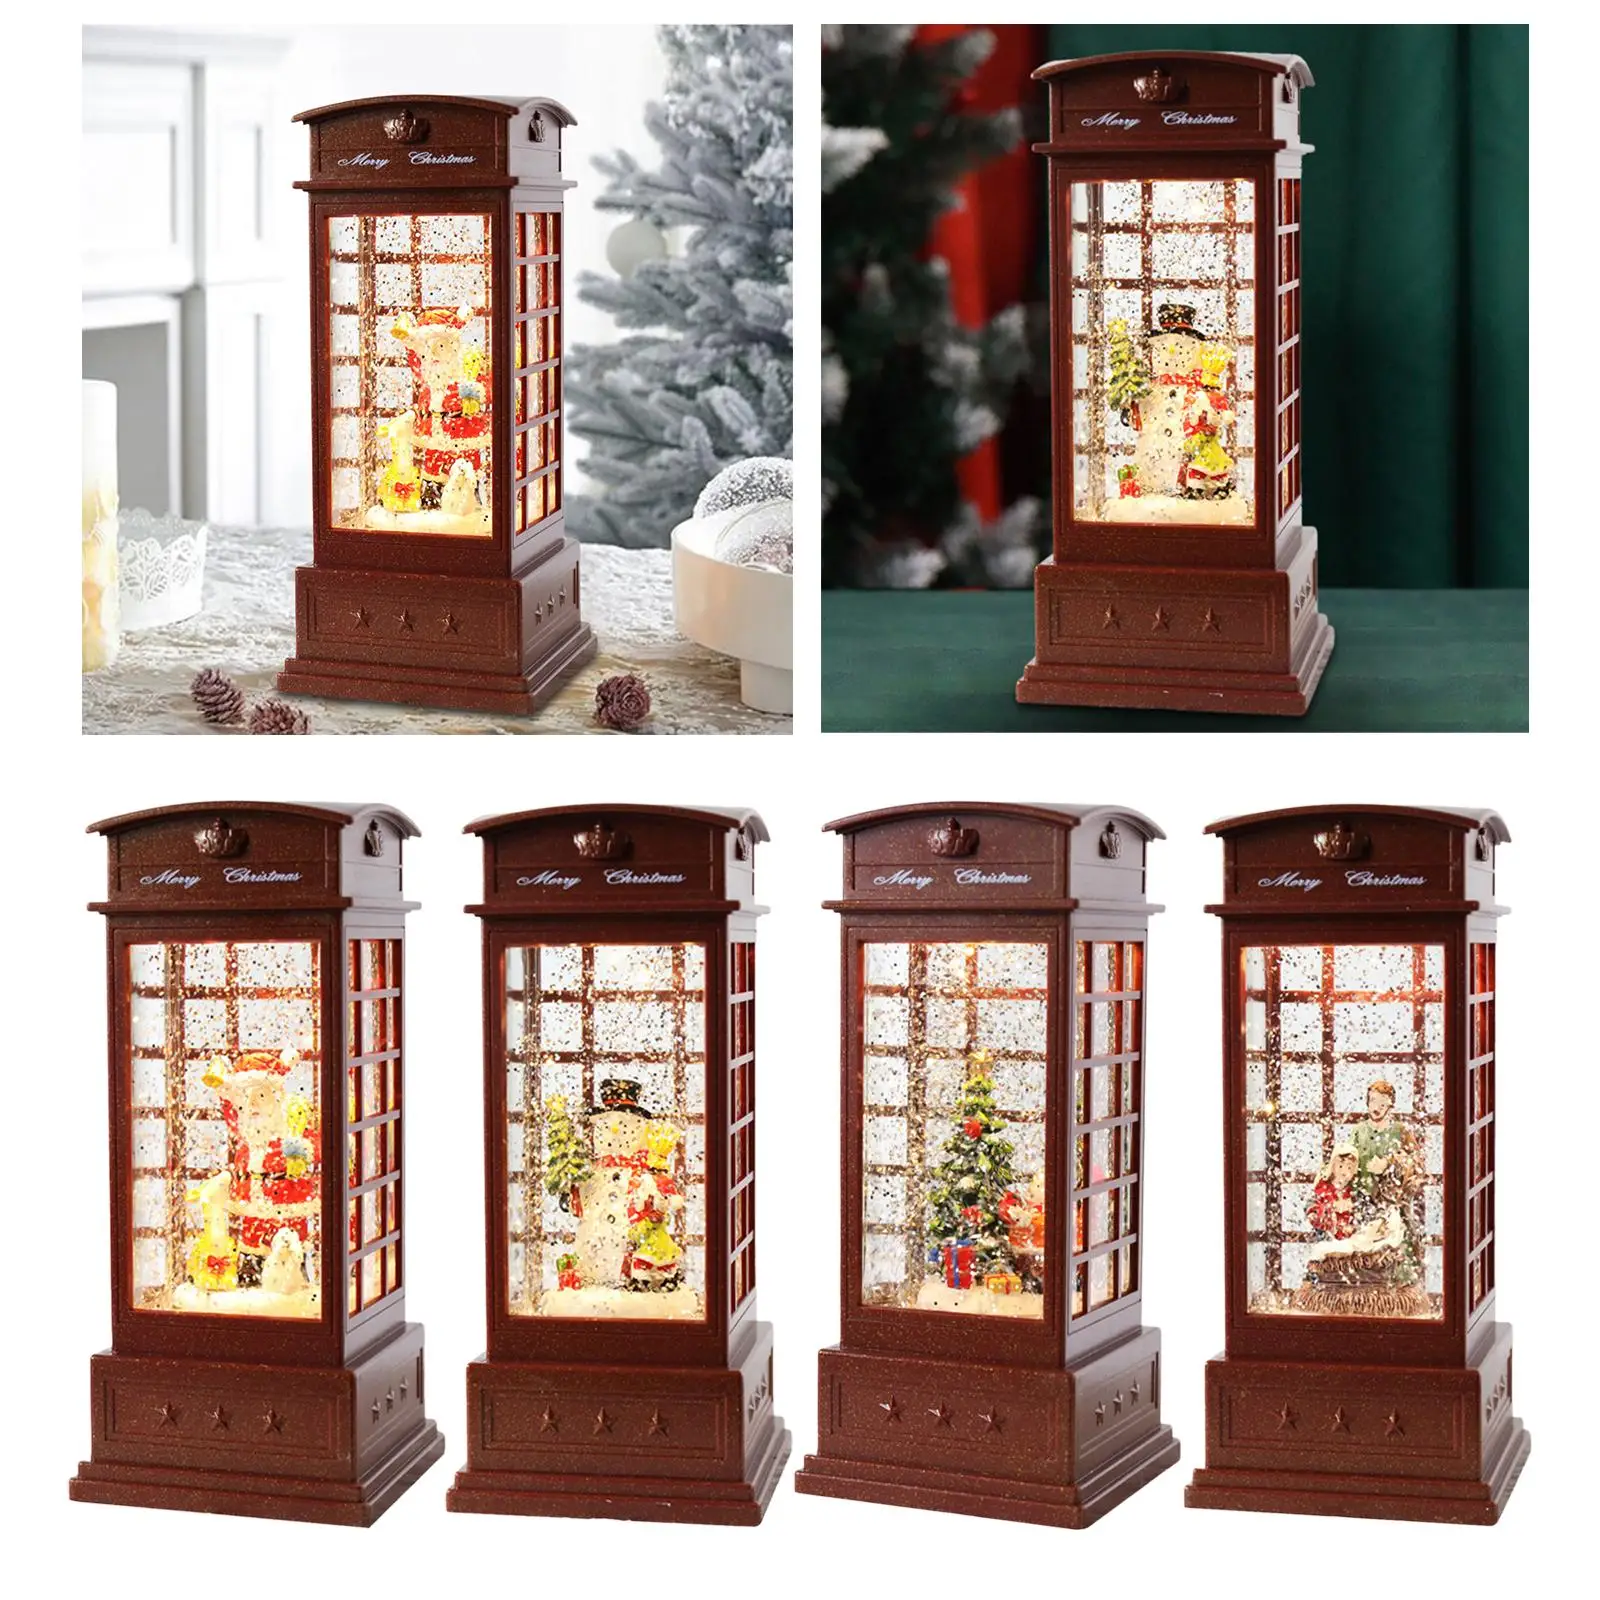 Portable Christmas light Centerpiece Decor Ornament Lantern for Wedding Tabletop Holiday Decoration Festival